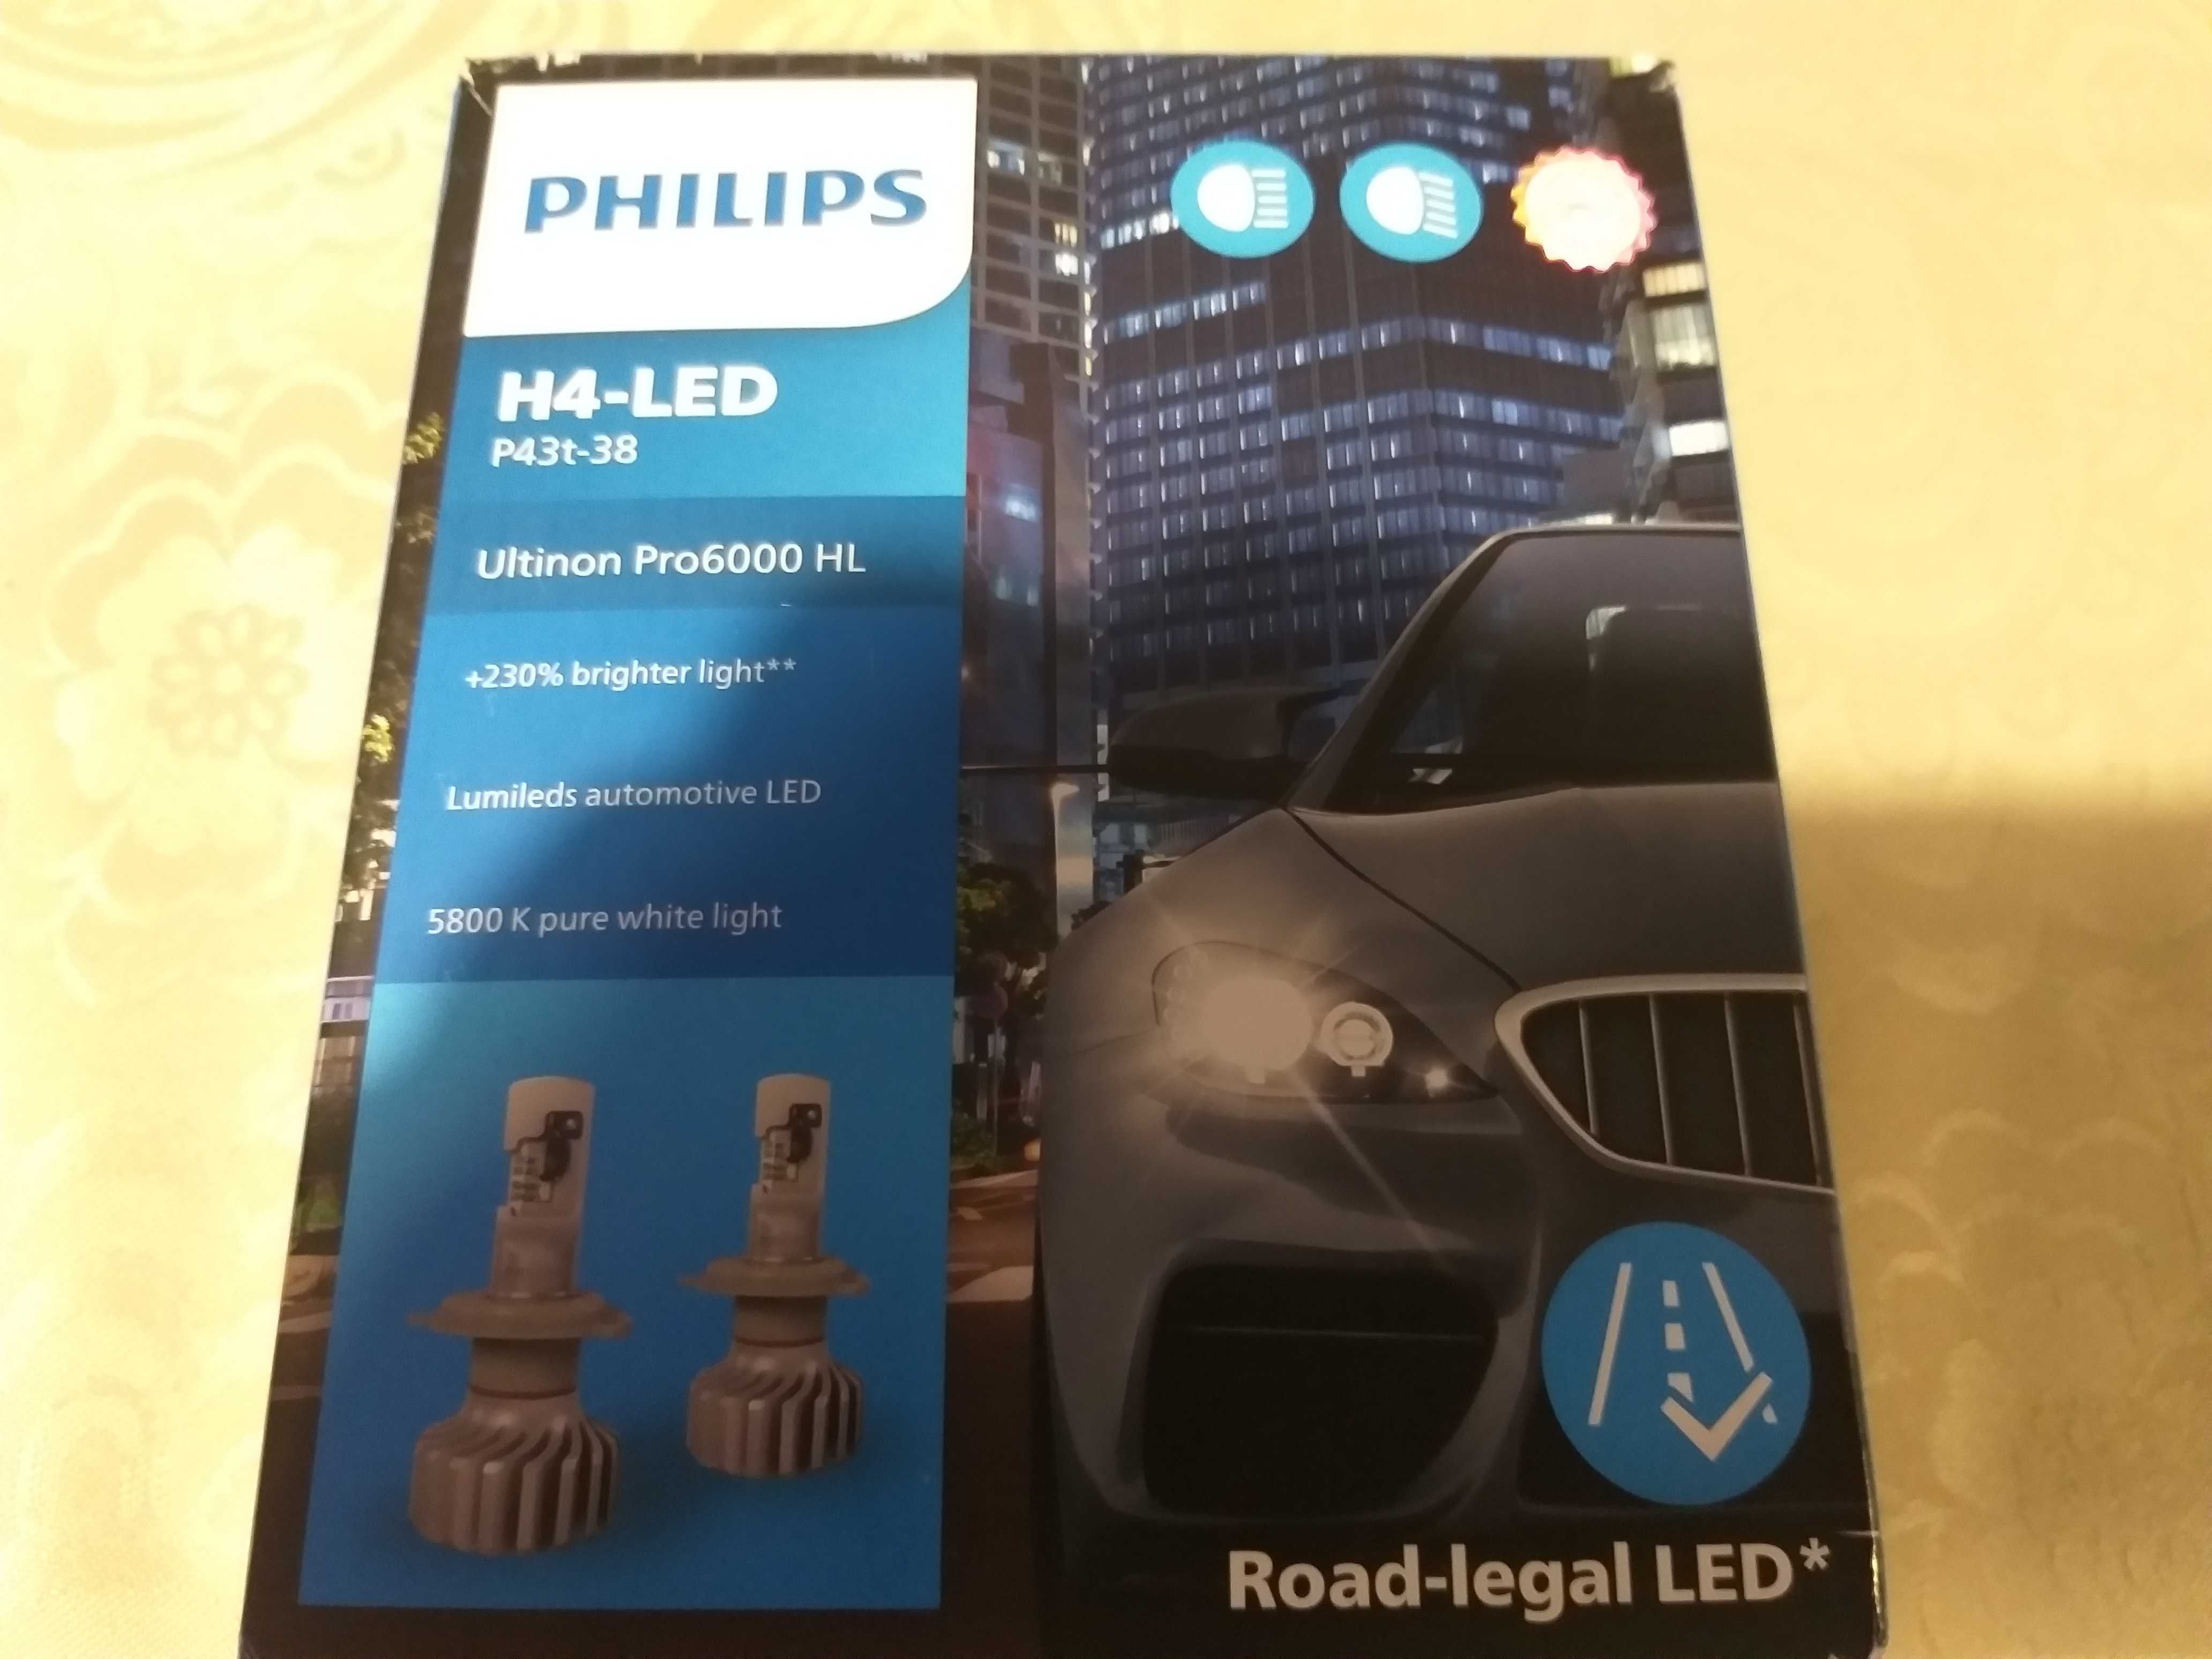 Philips H4 - LED Ultinon Pro6000 HL, 12V